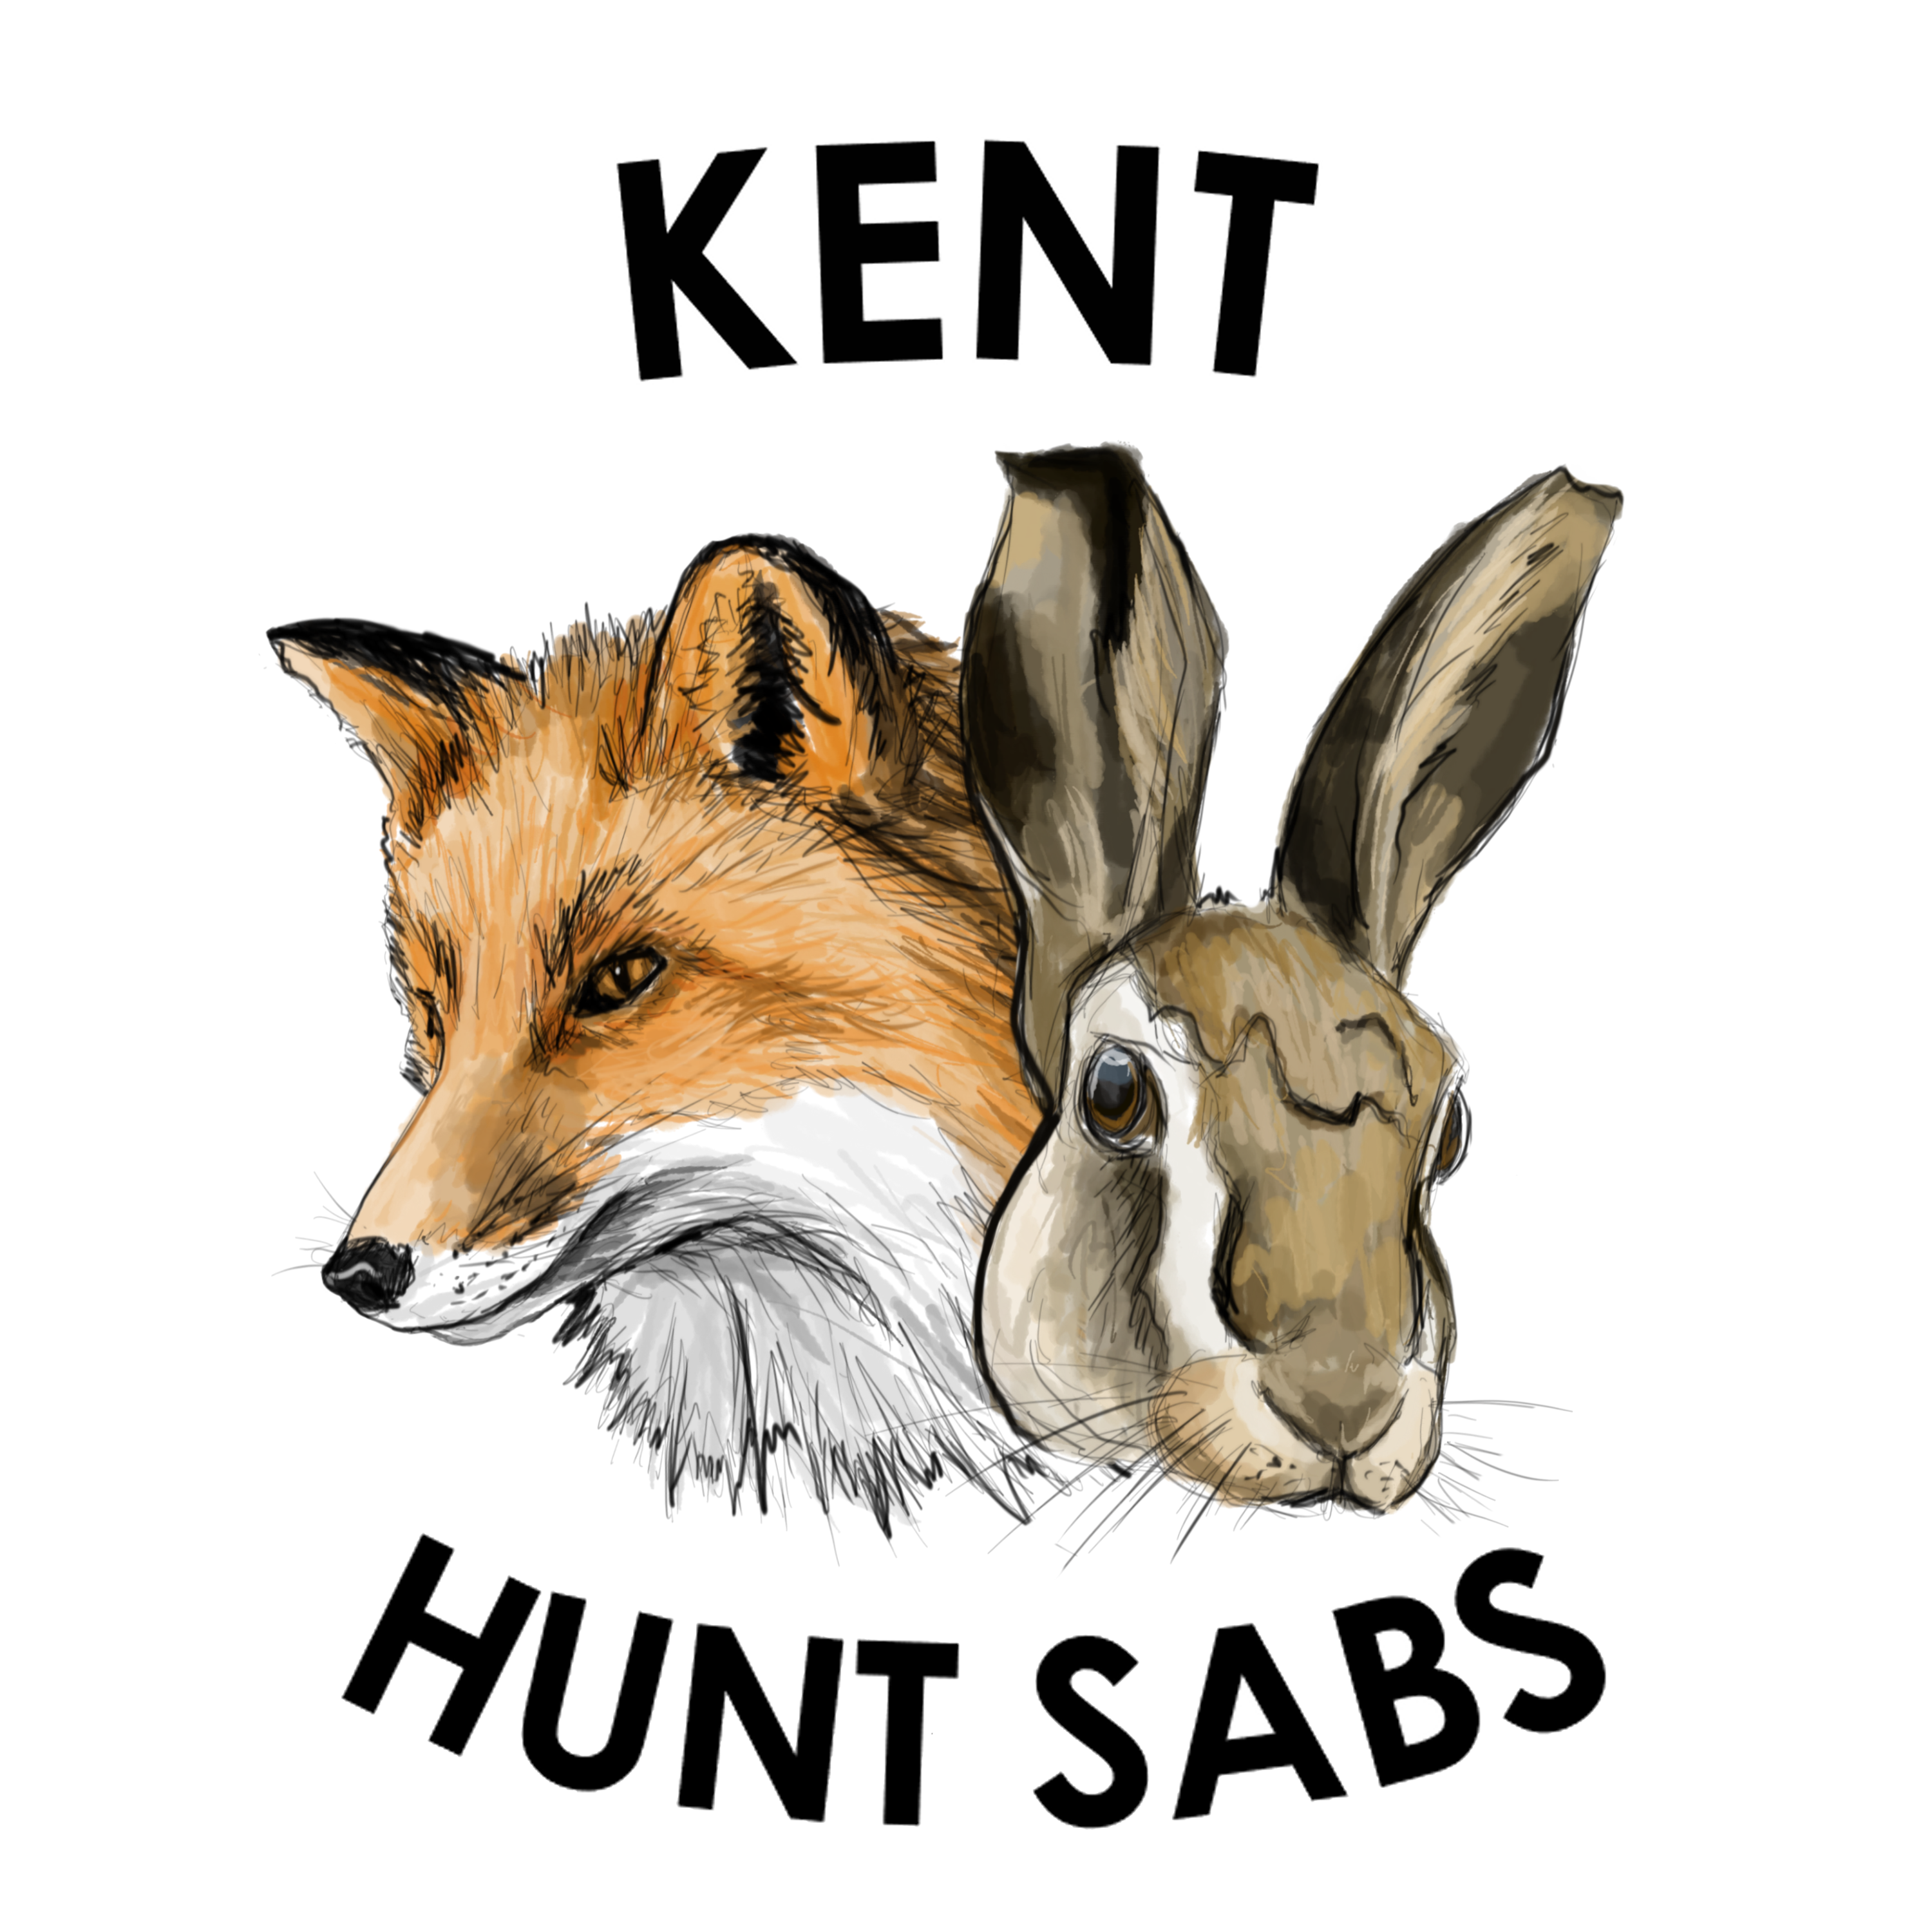 Kent Hunt Sabs